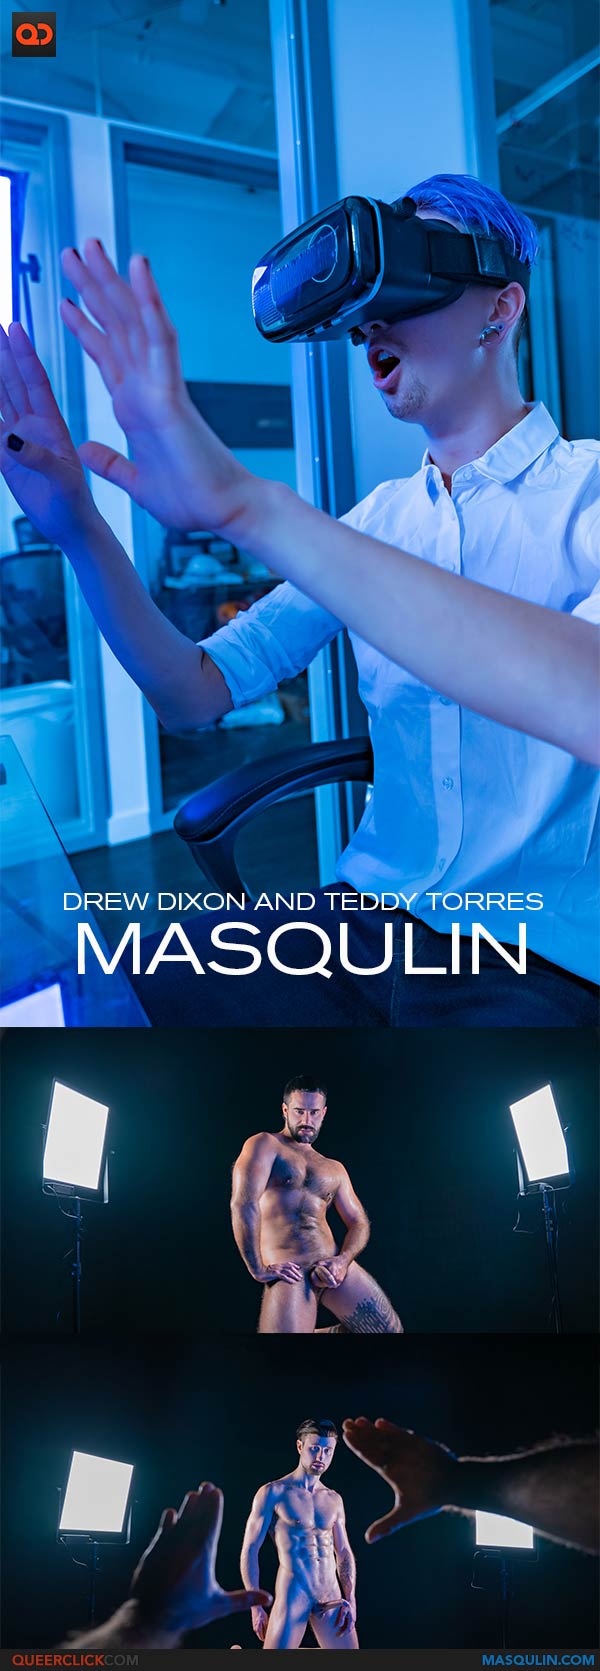 Masqulin: Drew Dixon and Teddy Torres